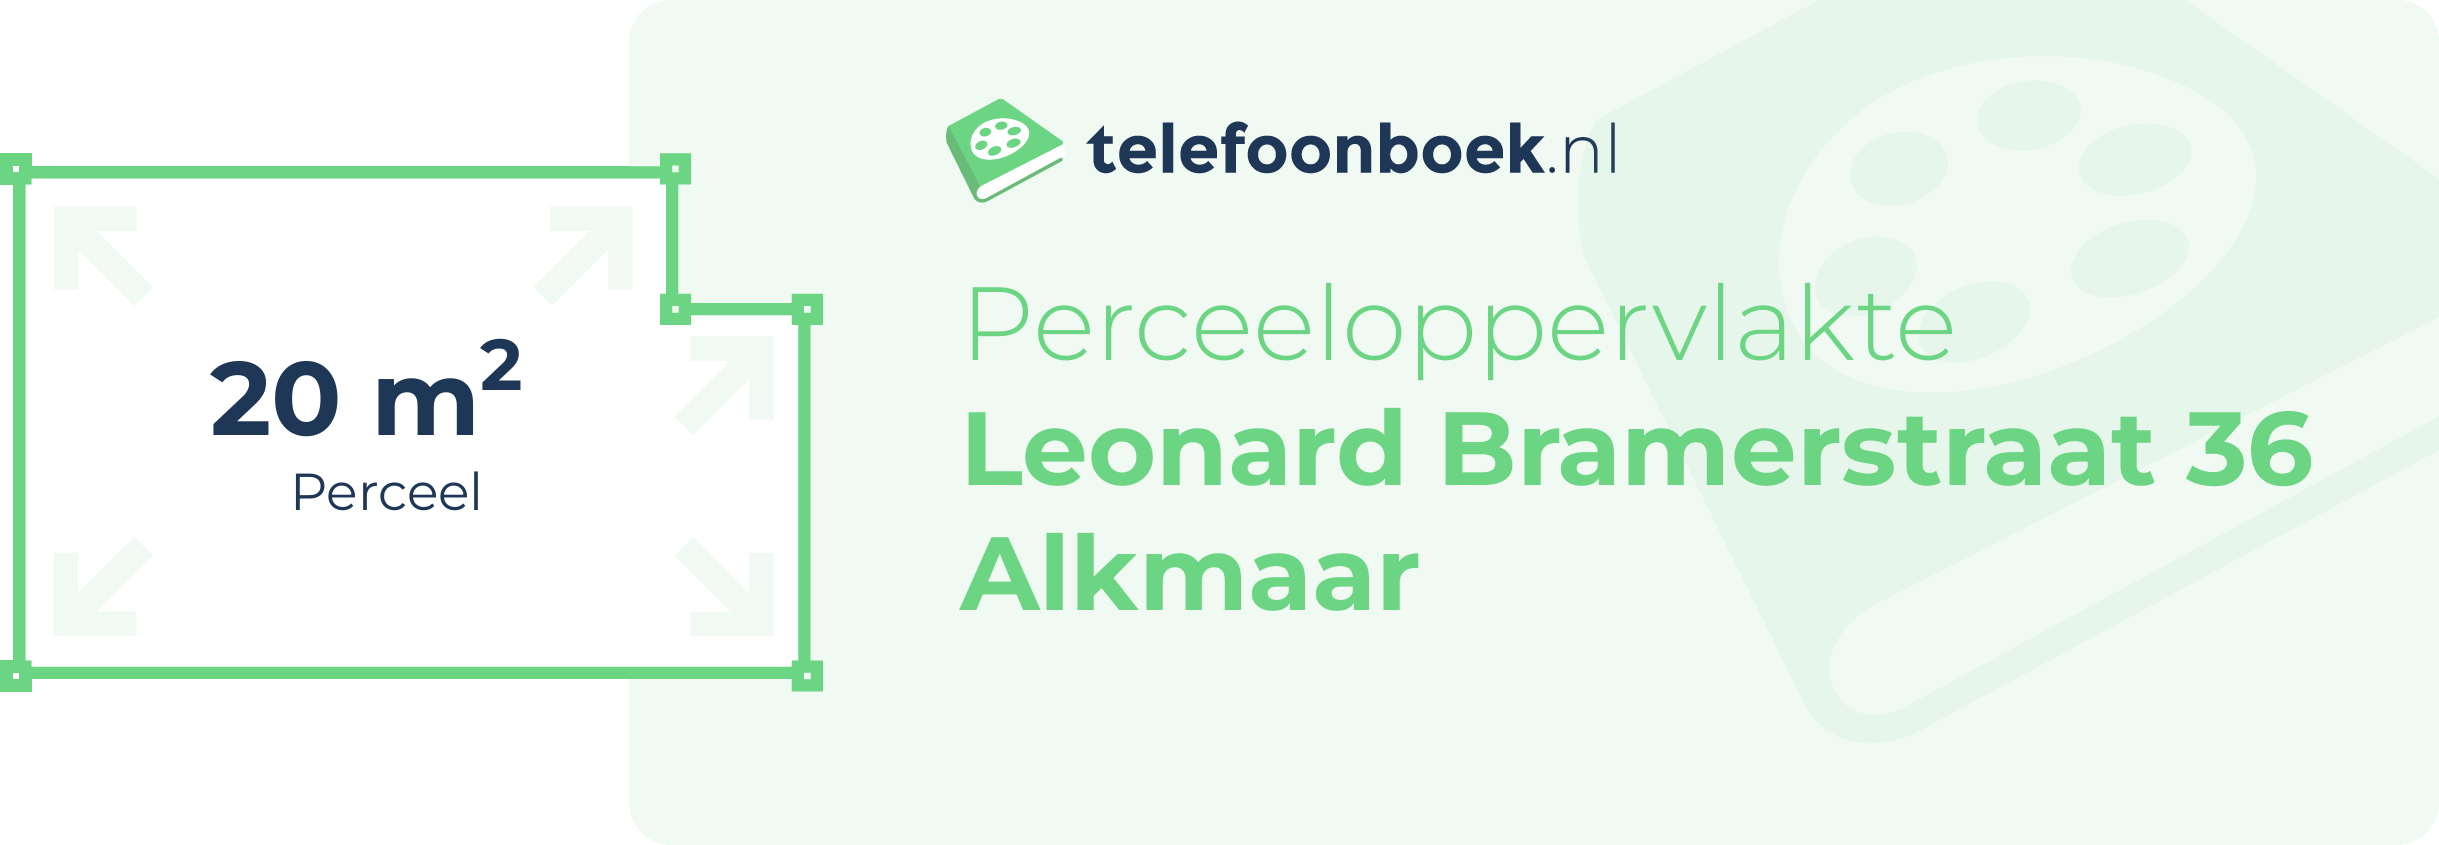 Perceeloppervlakte Leonard Bramerstraat 36 Alkmaar